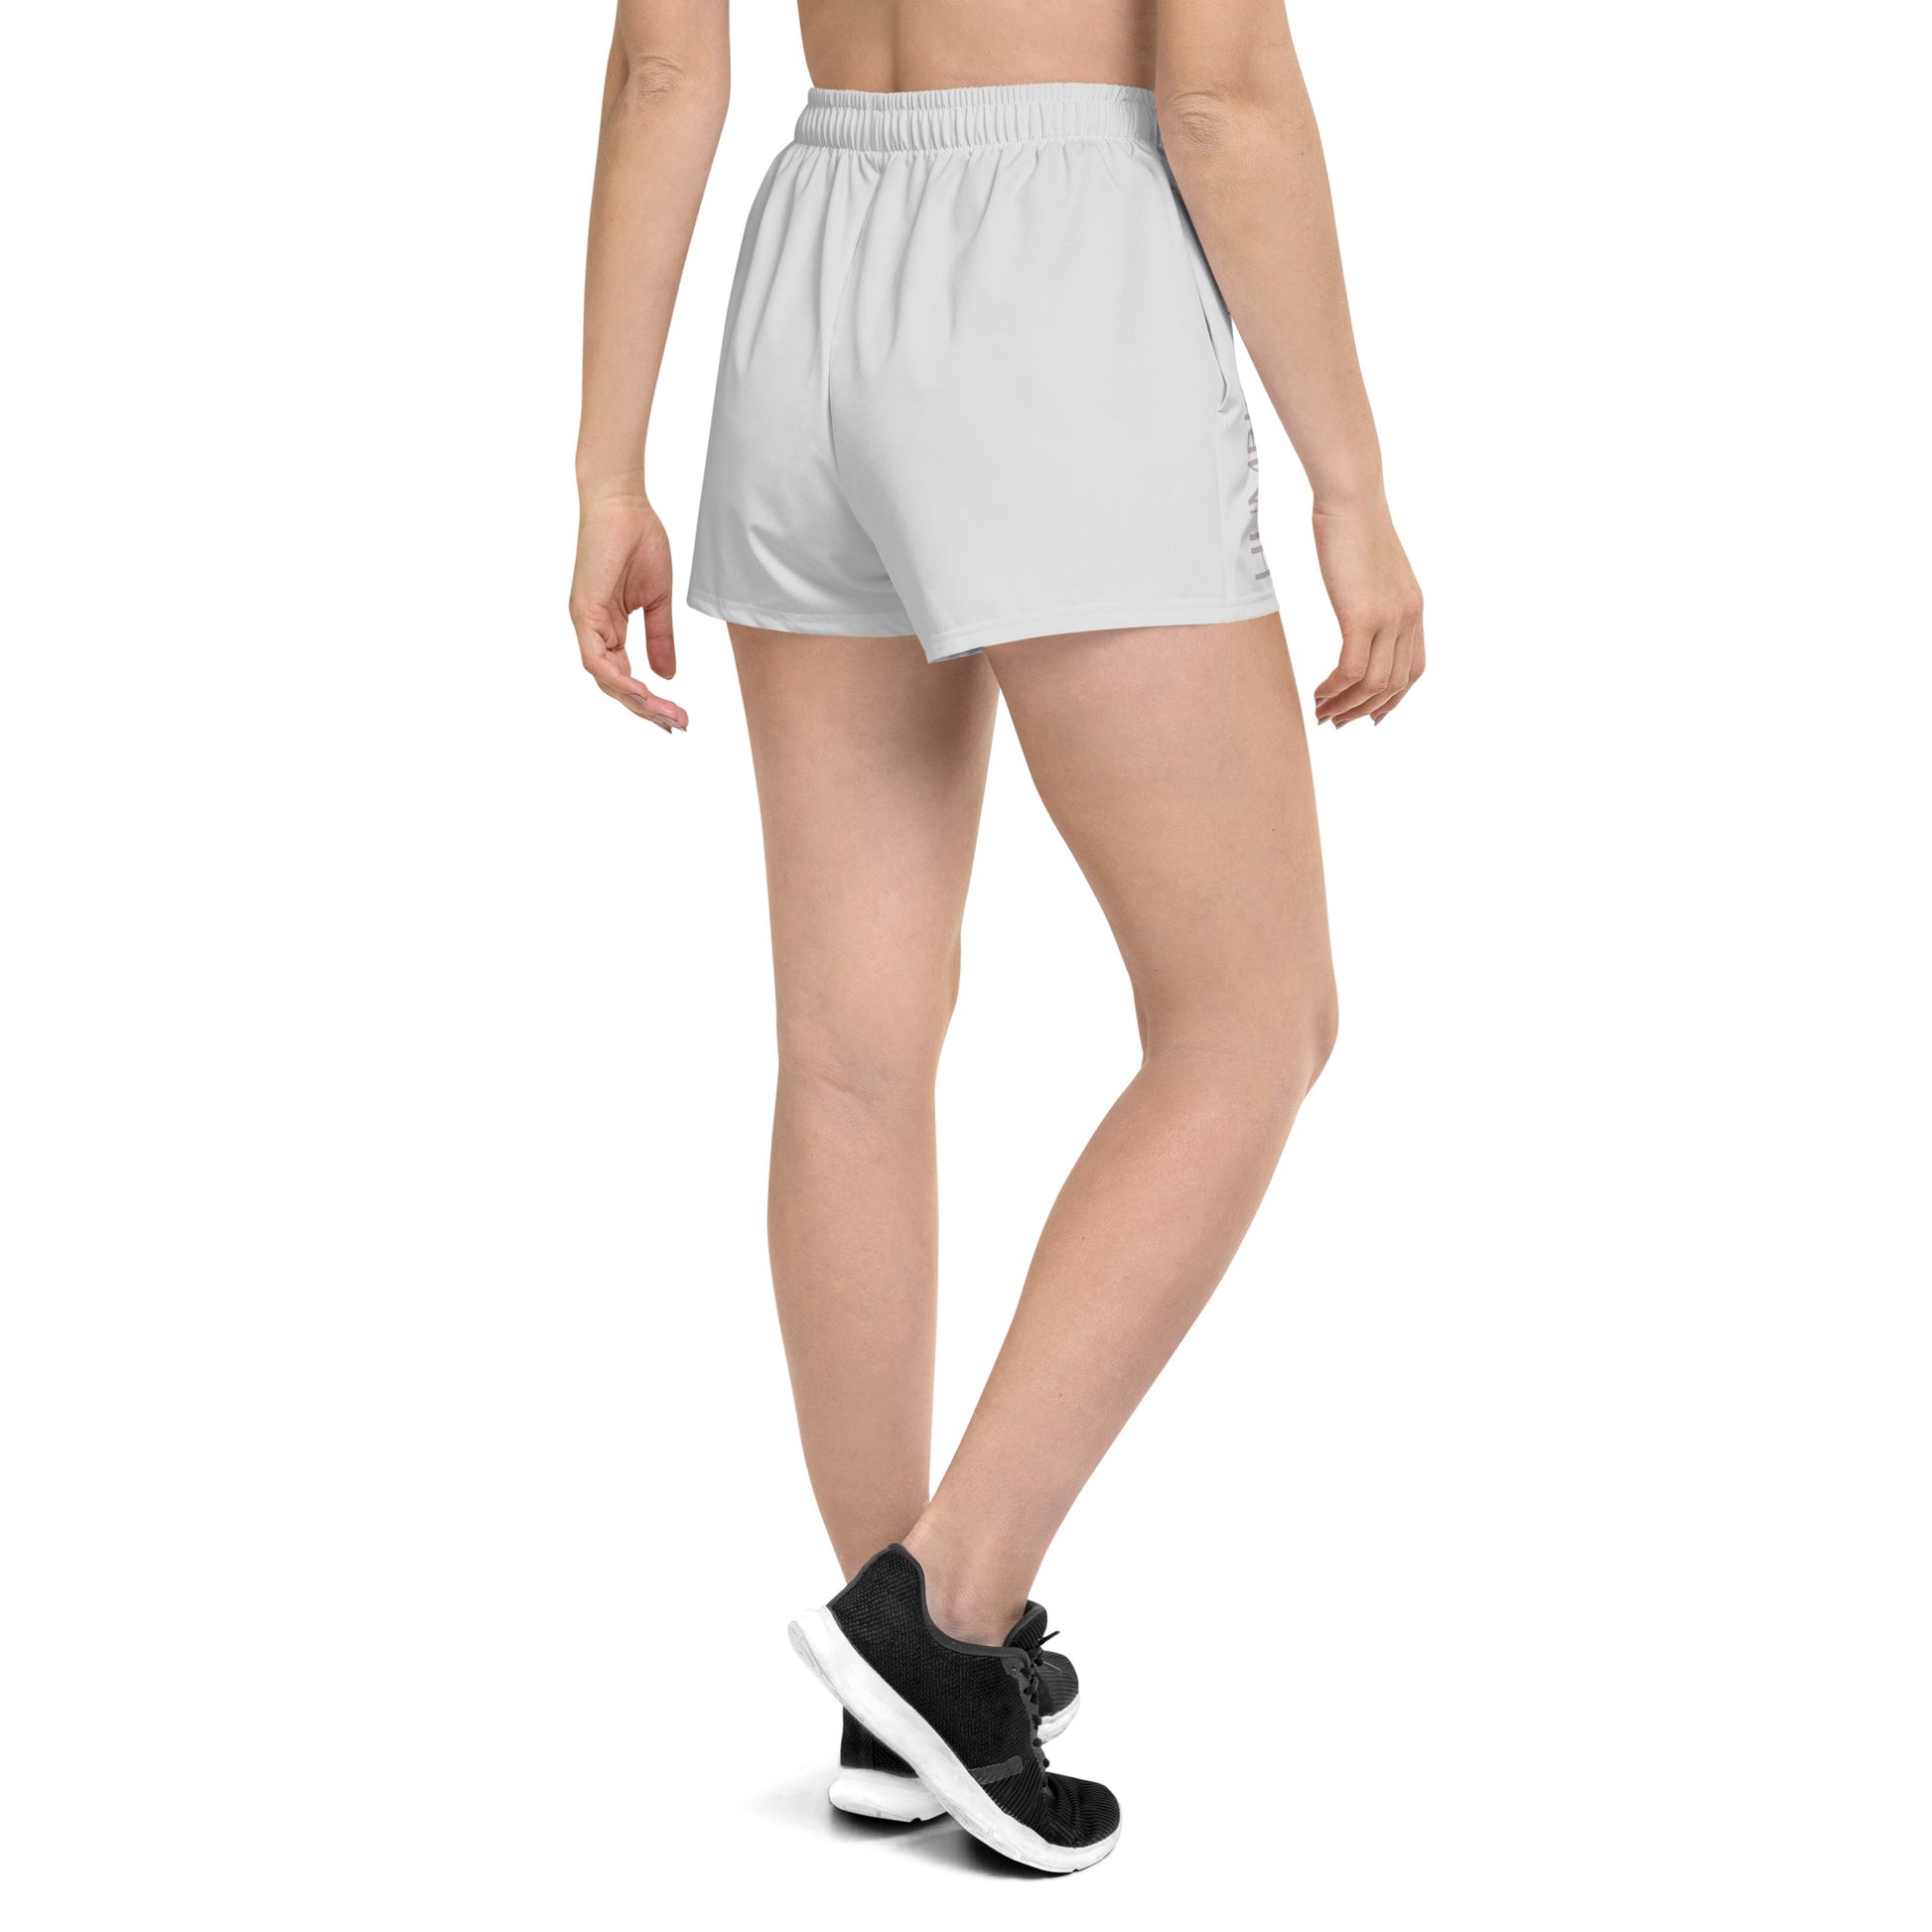 Humble Sportswear, women color match shorts, women’s running shorts, women’s recycled workout shorts 